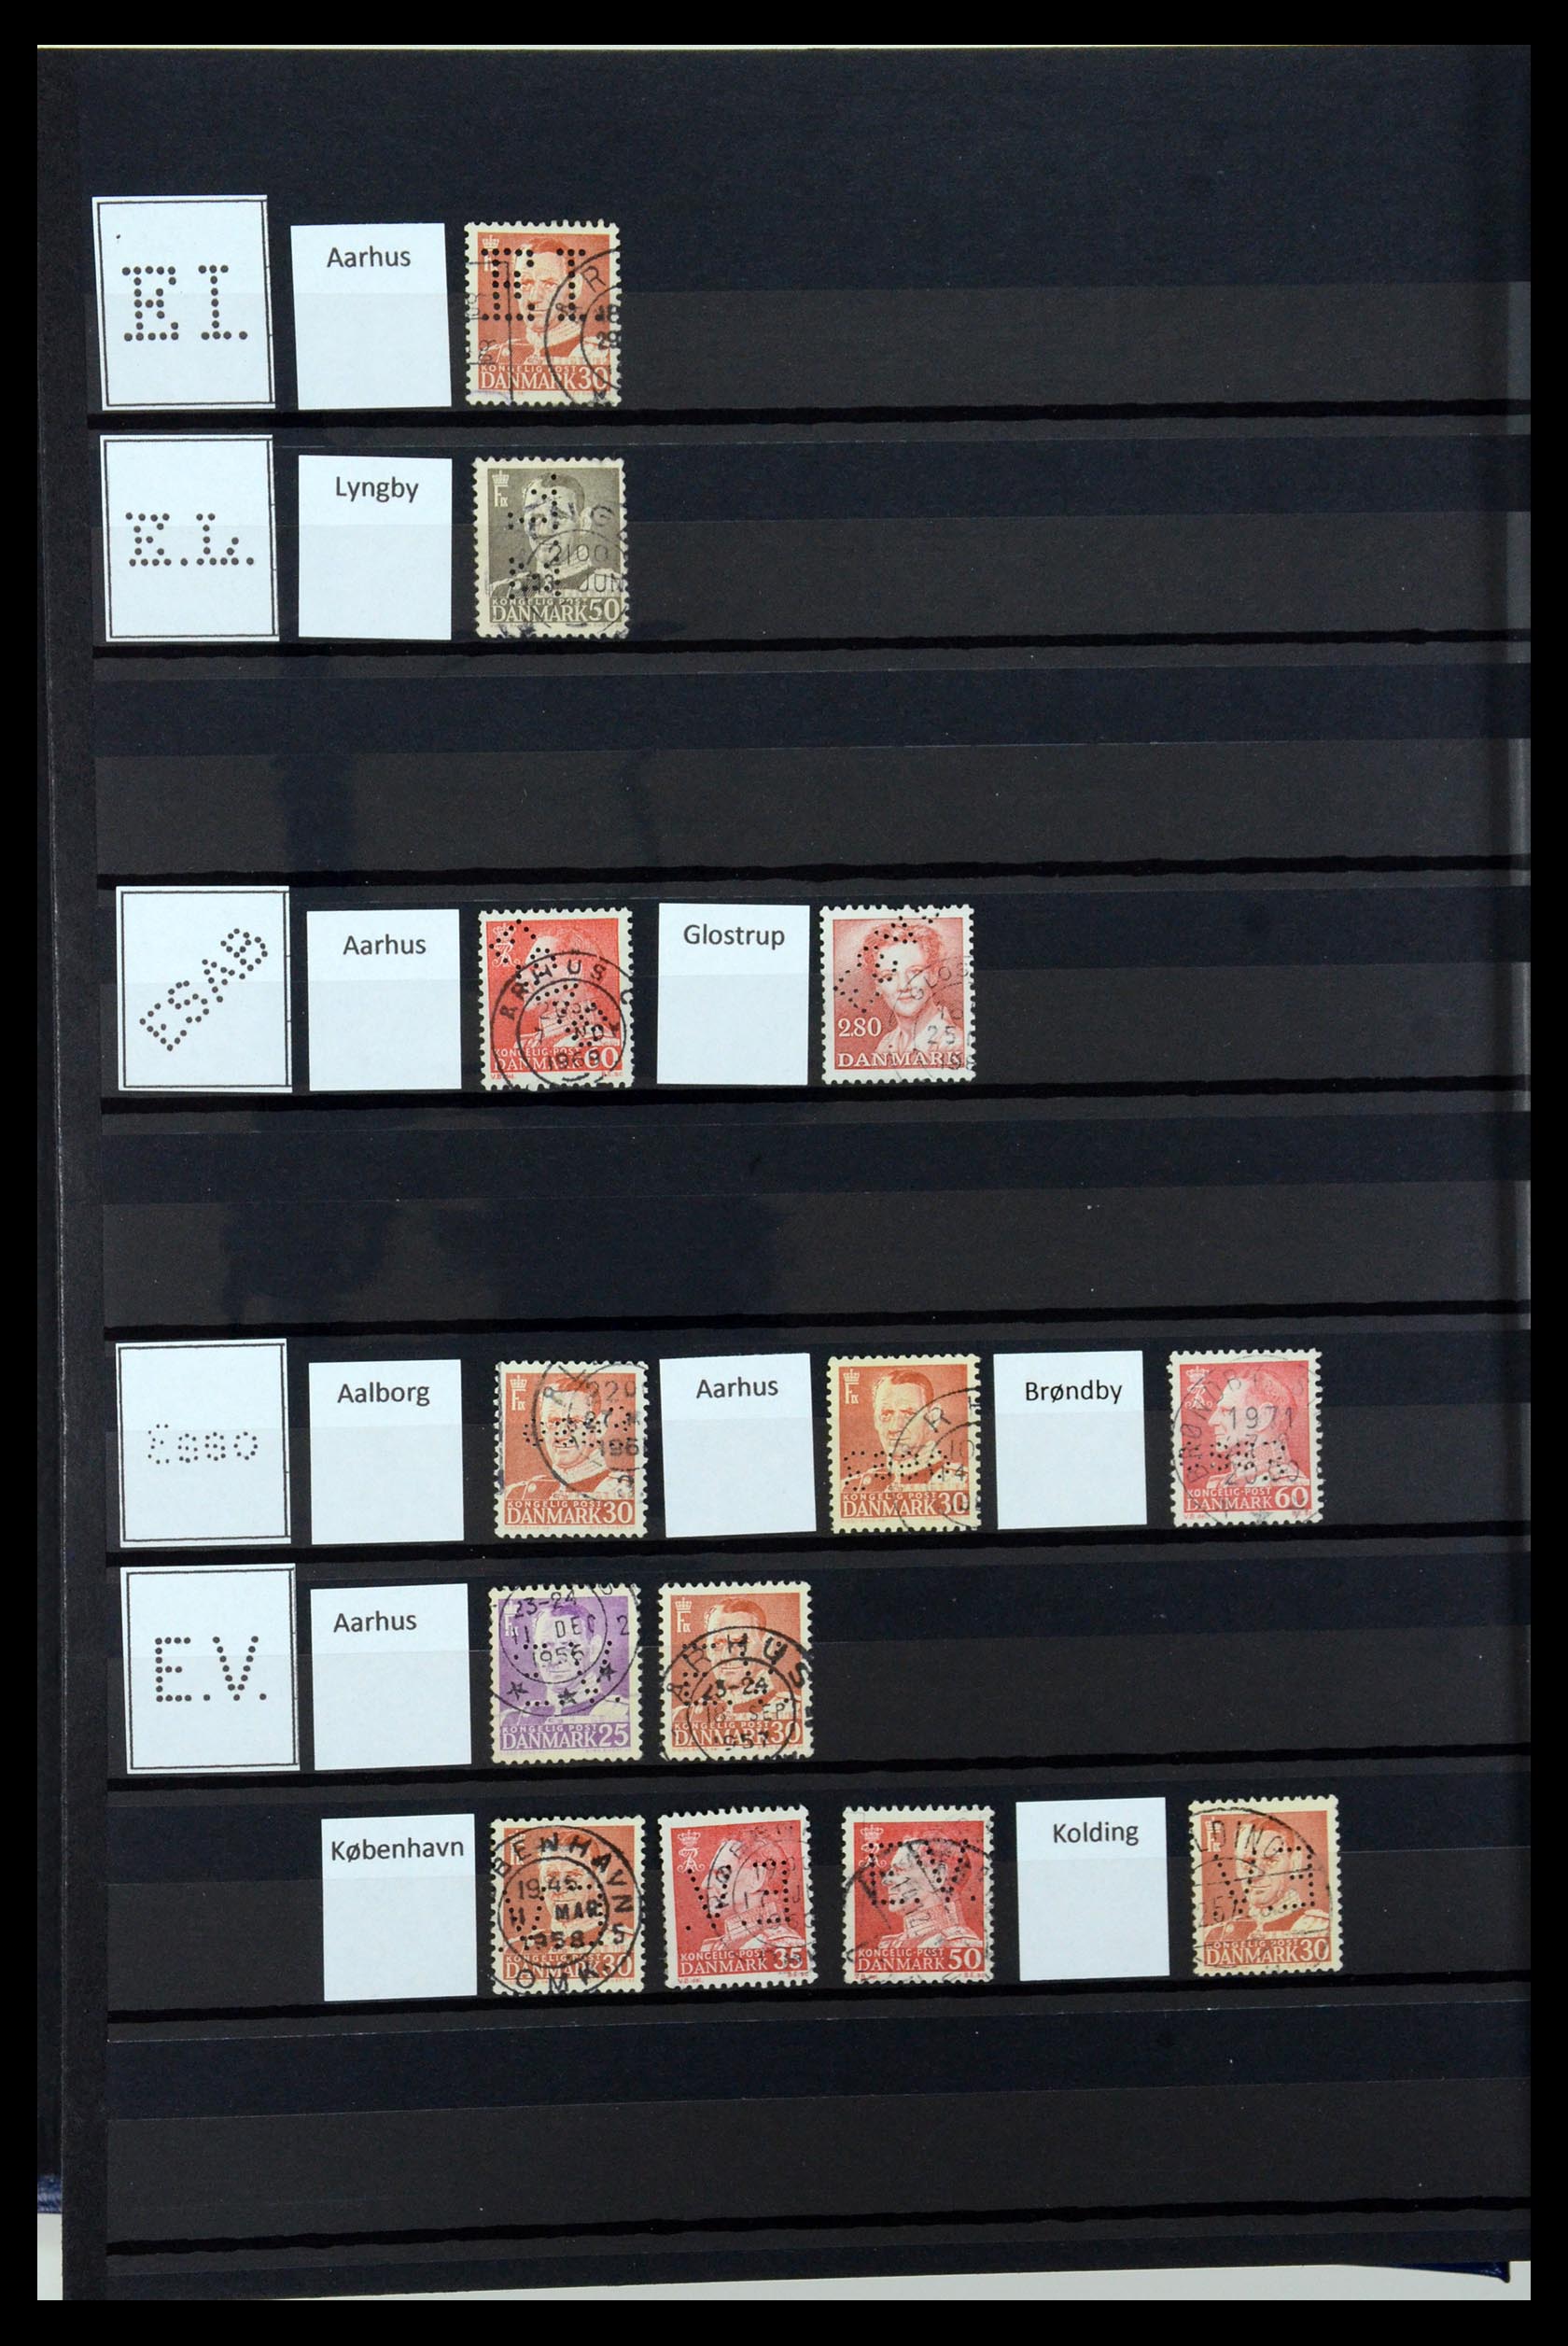 36396 065 - Stamp collection 36396 Denmark perfins.